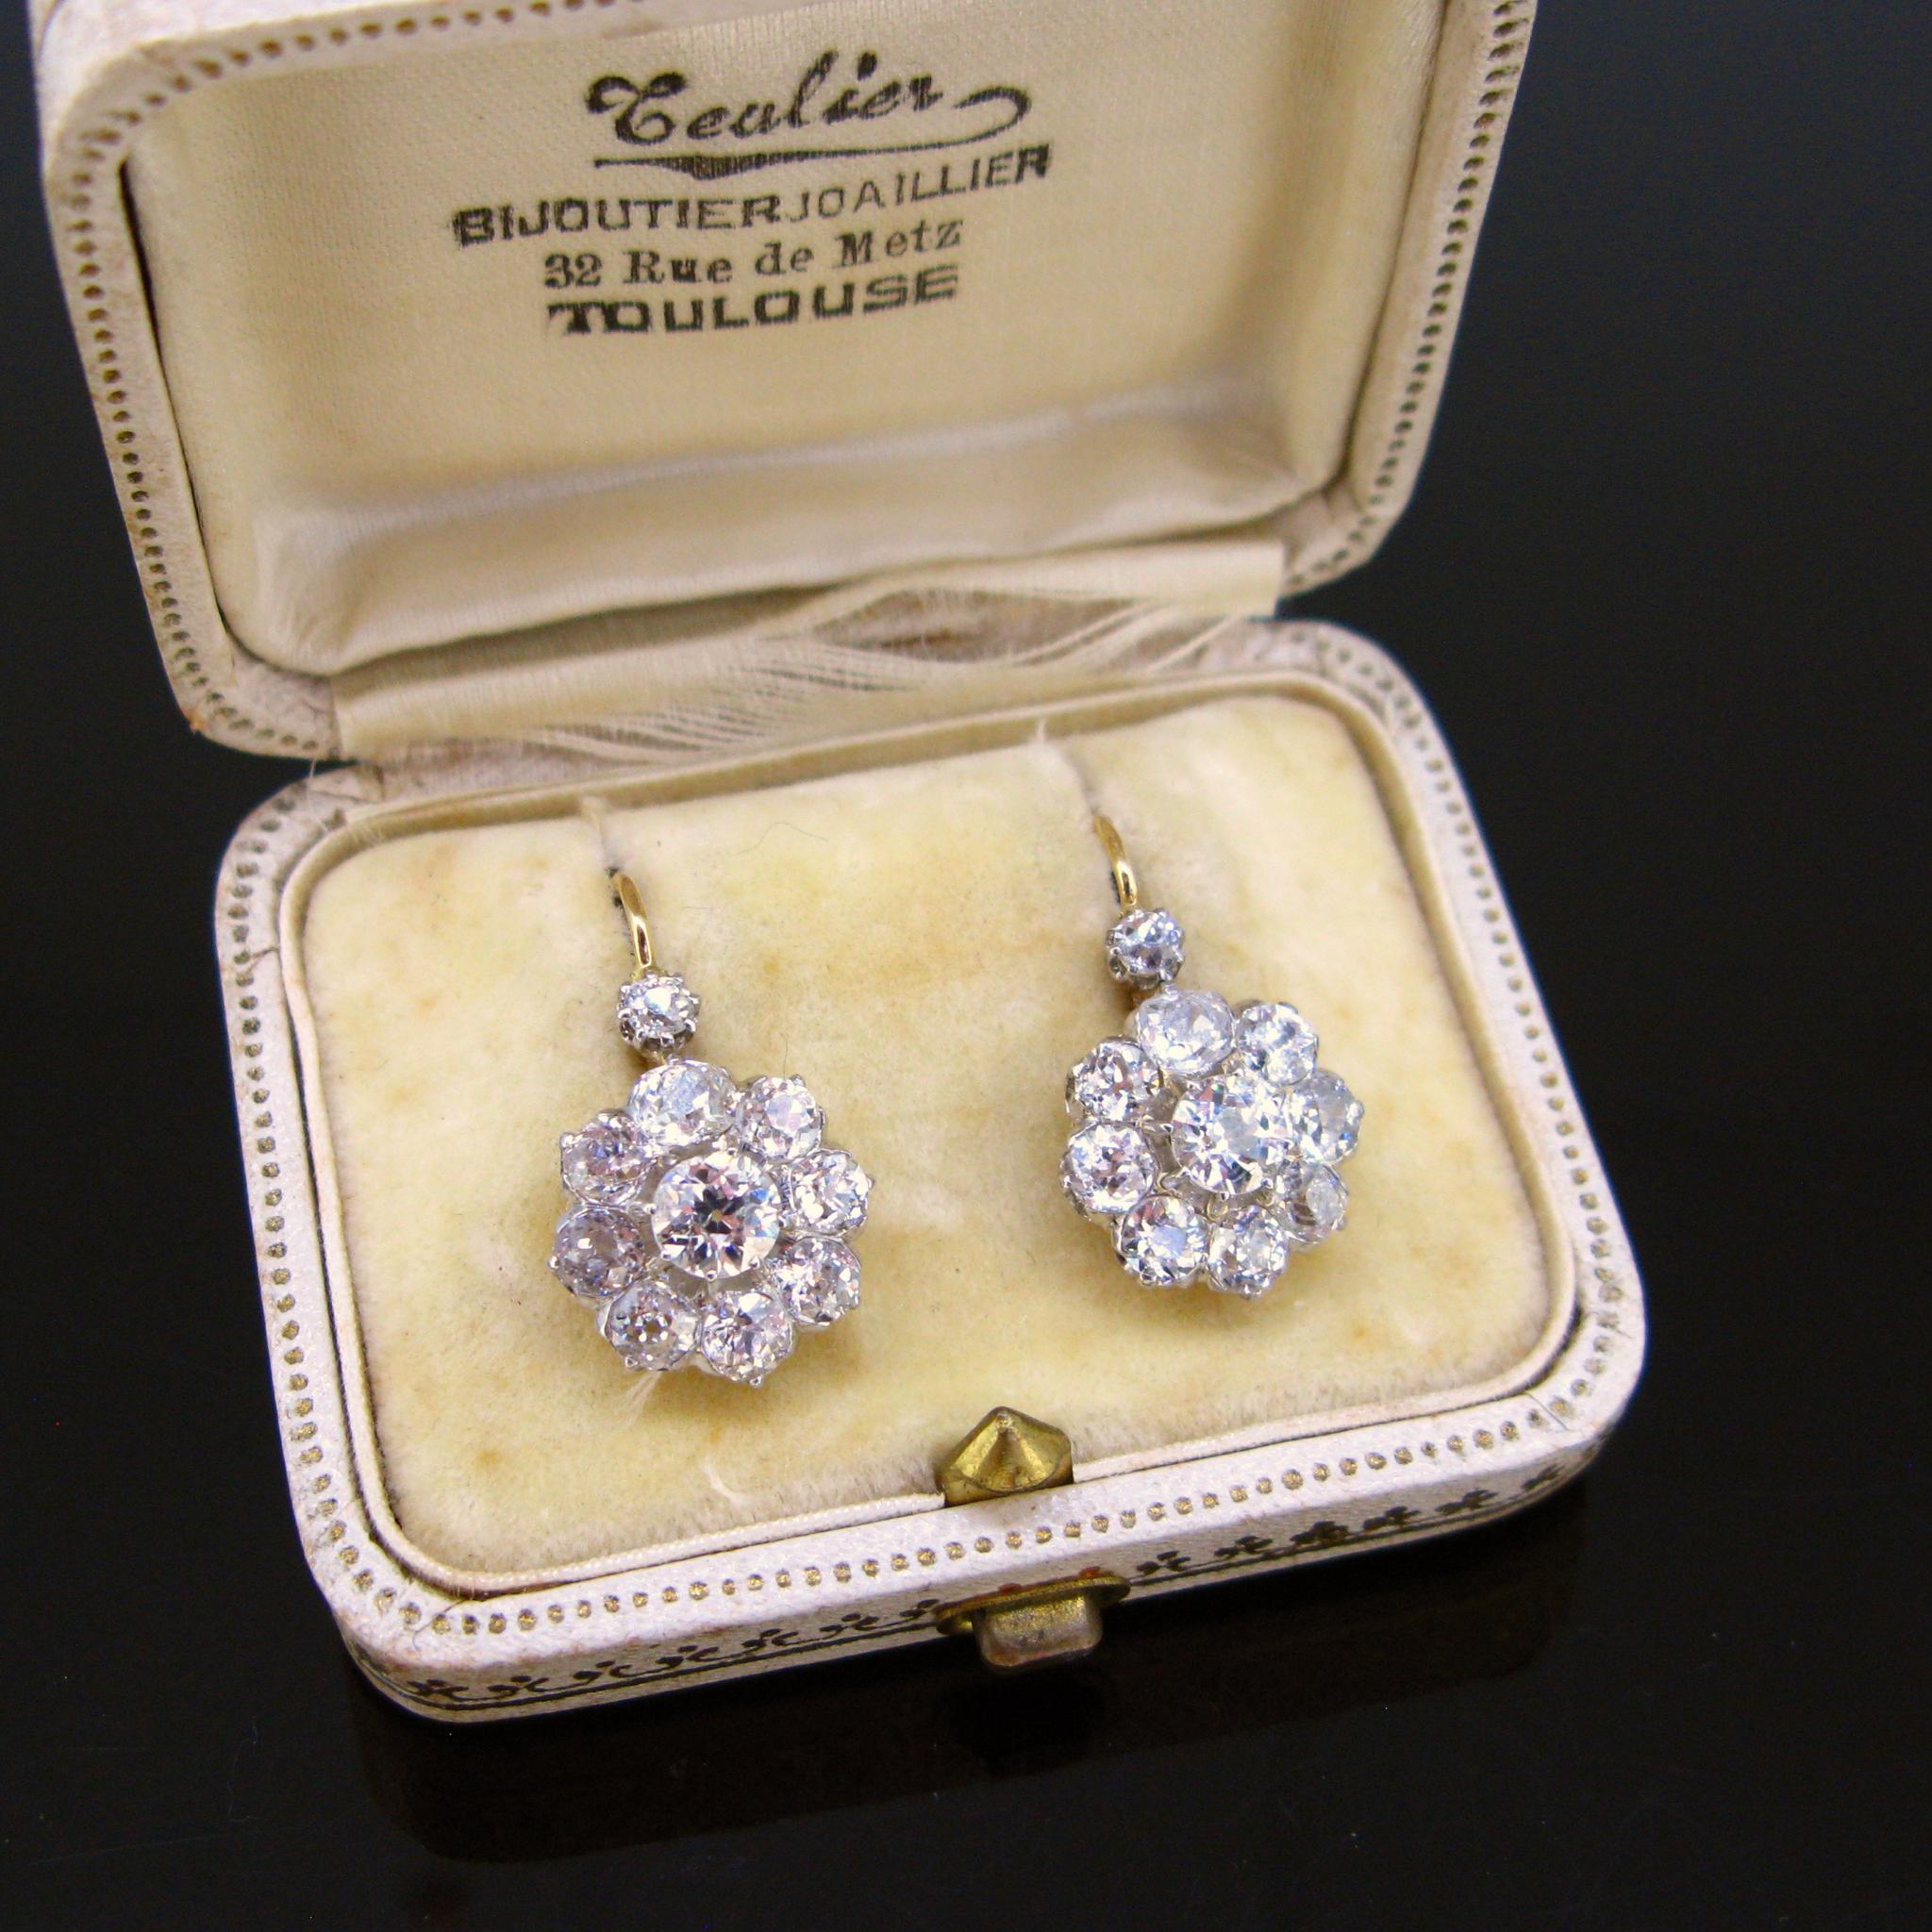 Antique Belle Époque Diamonds Dormeuses Earrings in Box, 18kt Gold and Platinum 2